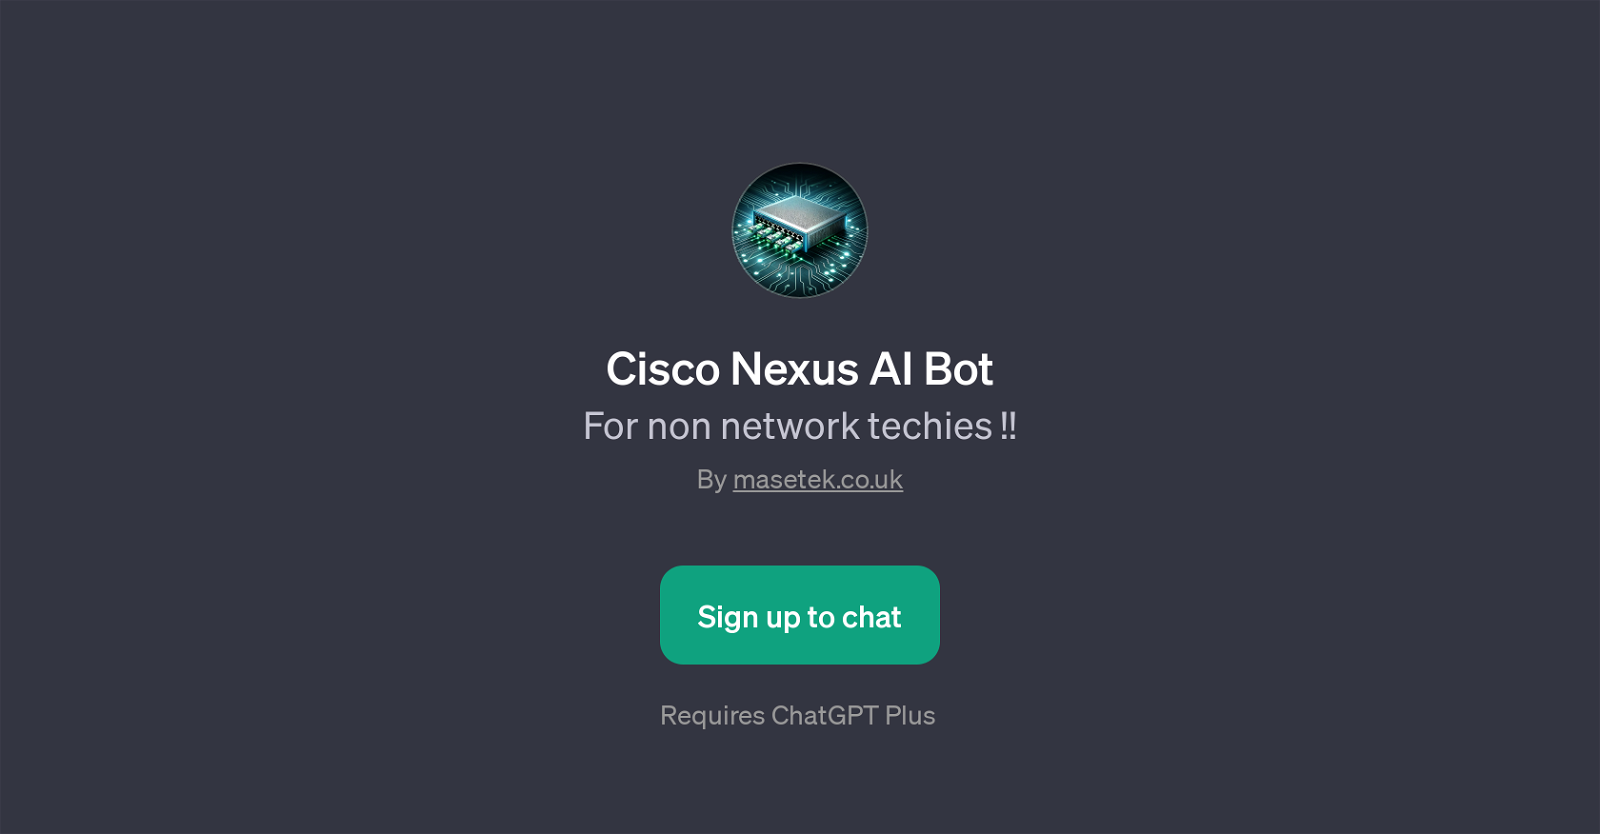 Cisco Nexus AI Bot website